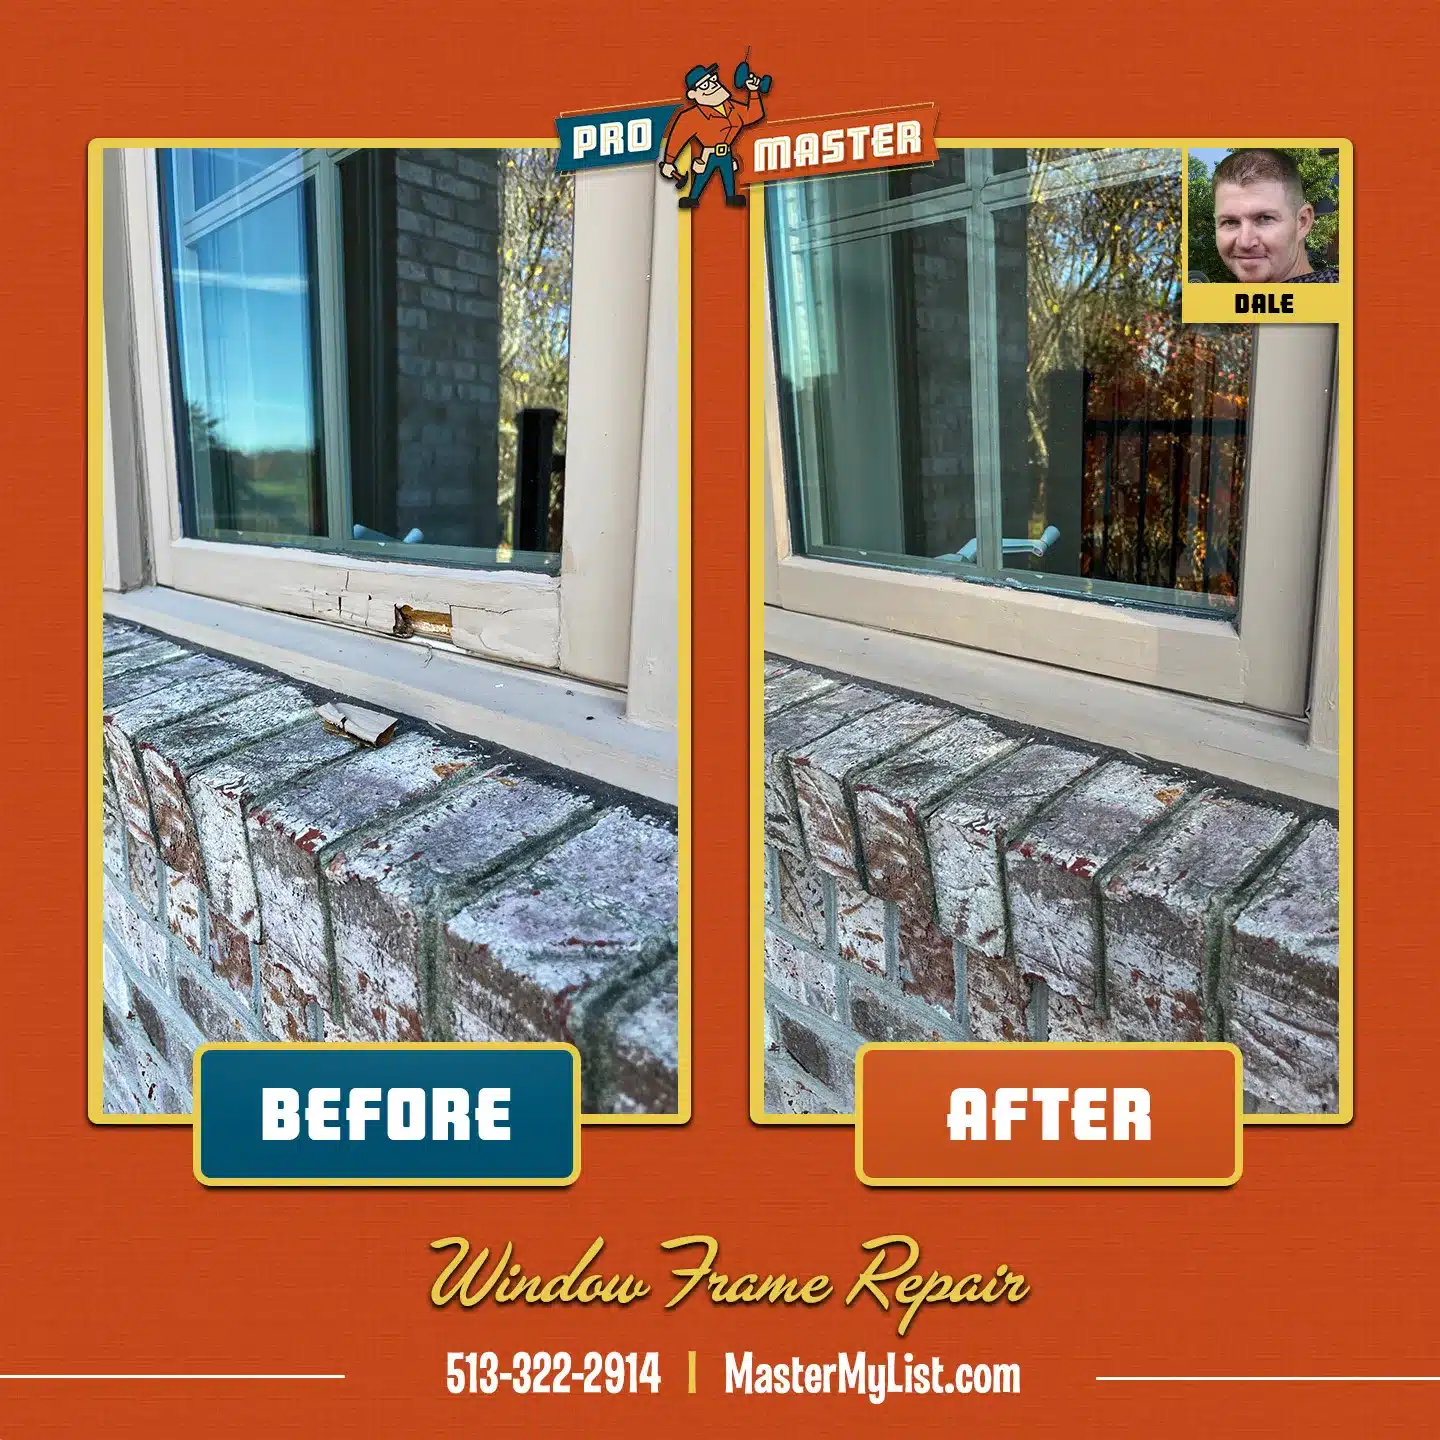 Window frame repair by ProMaster craftsman in Cincinnati for winter home maintenance.